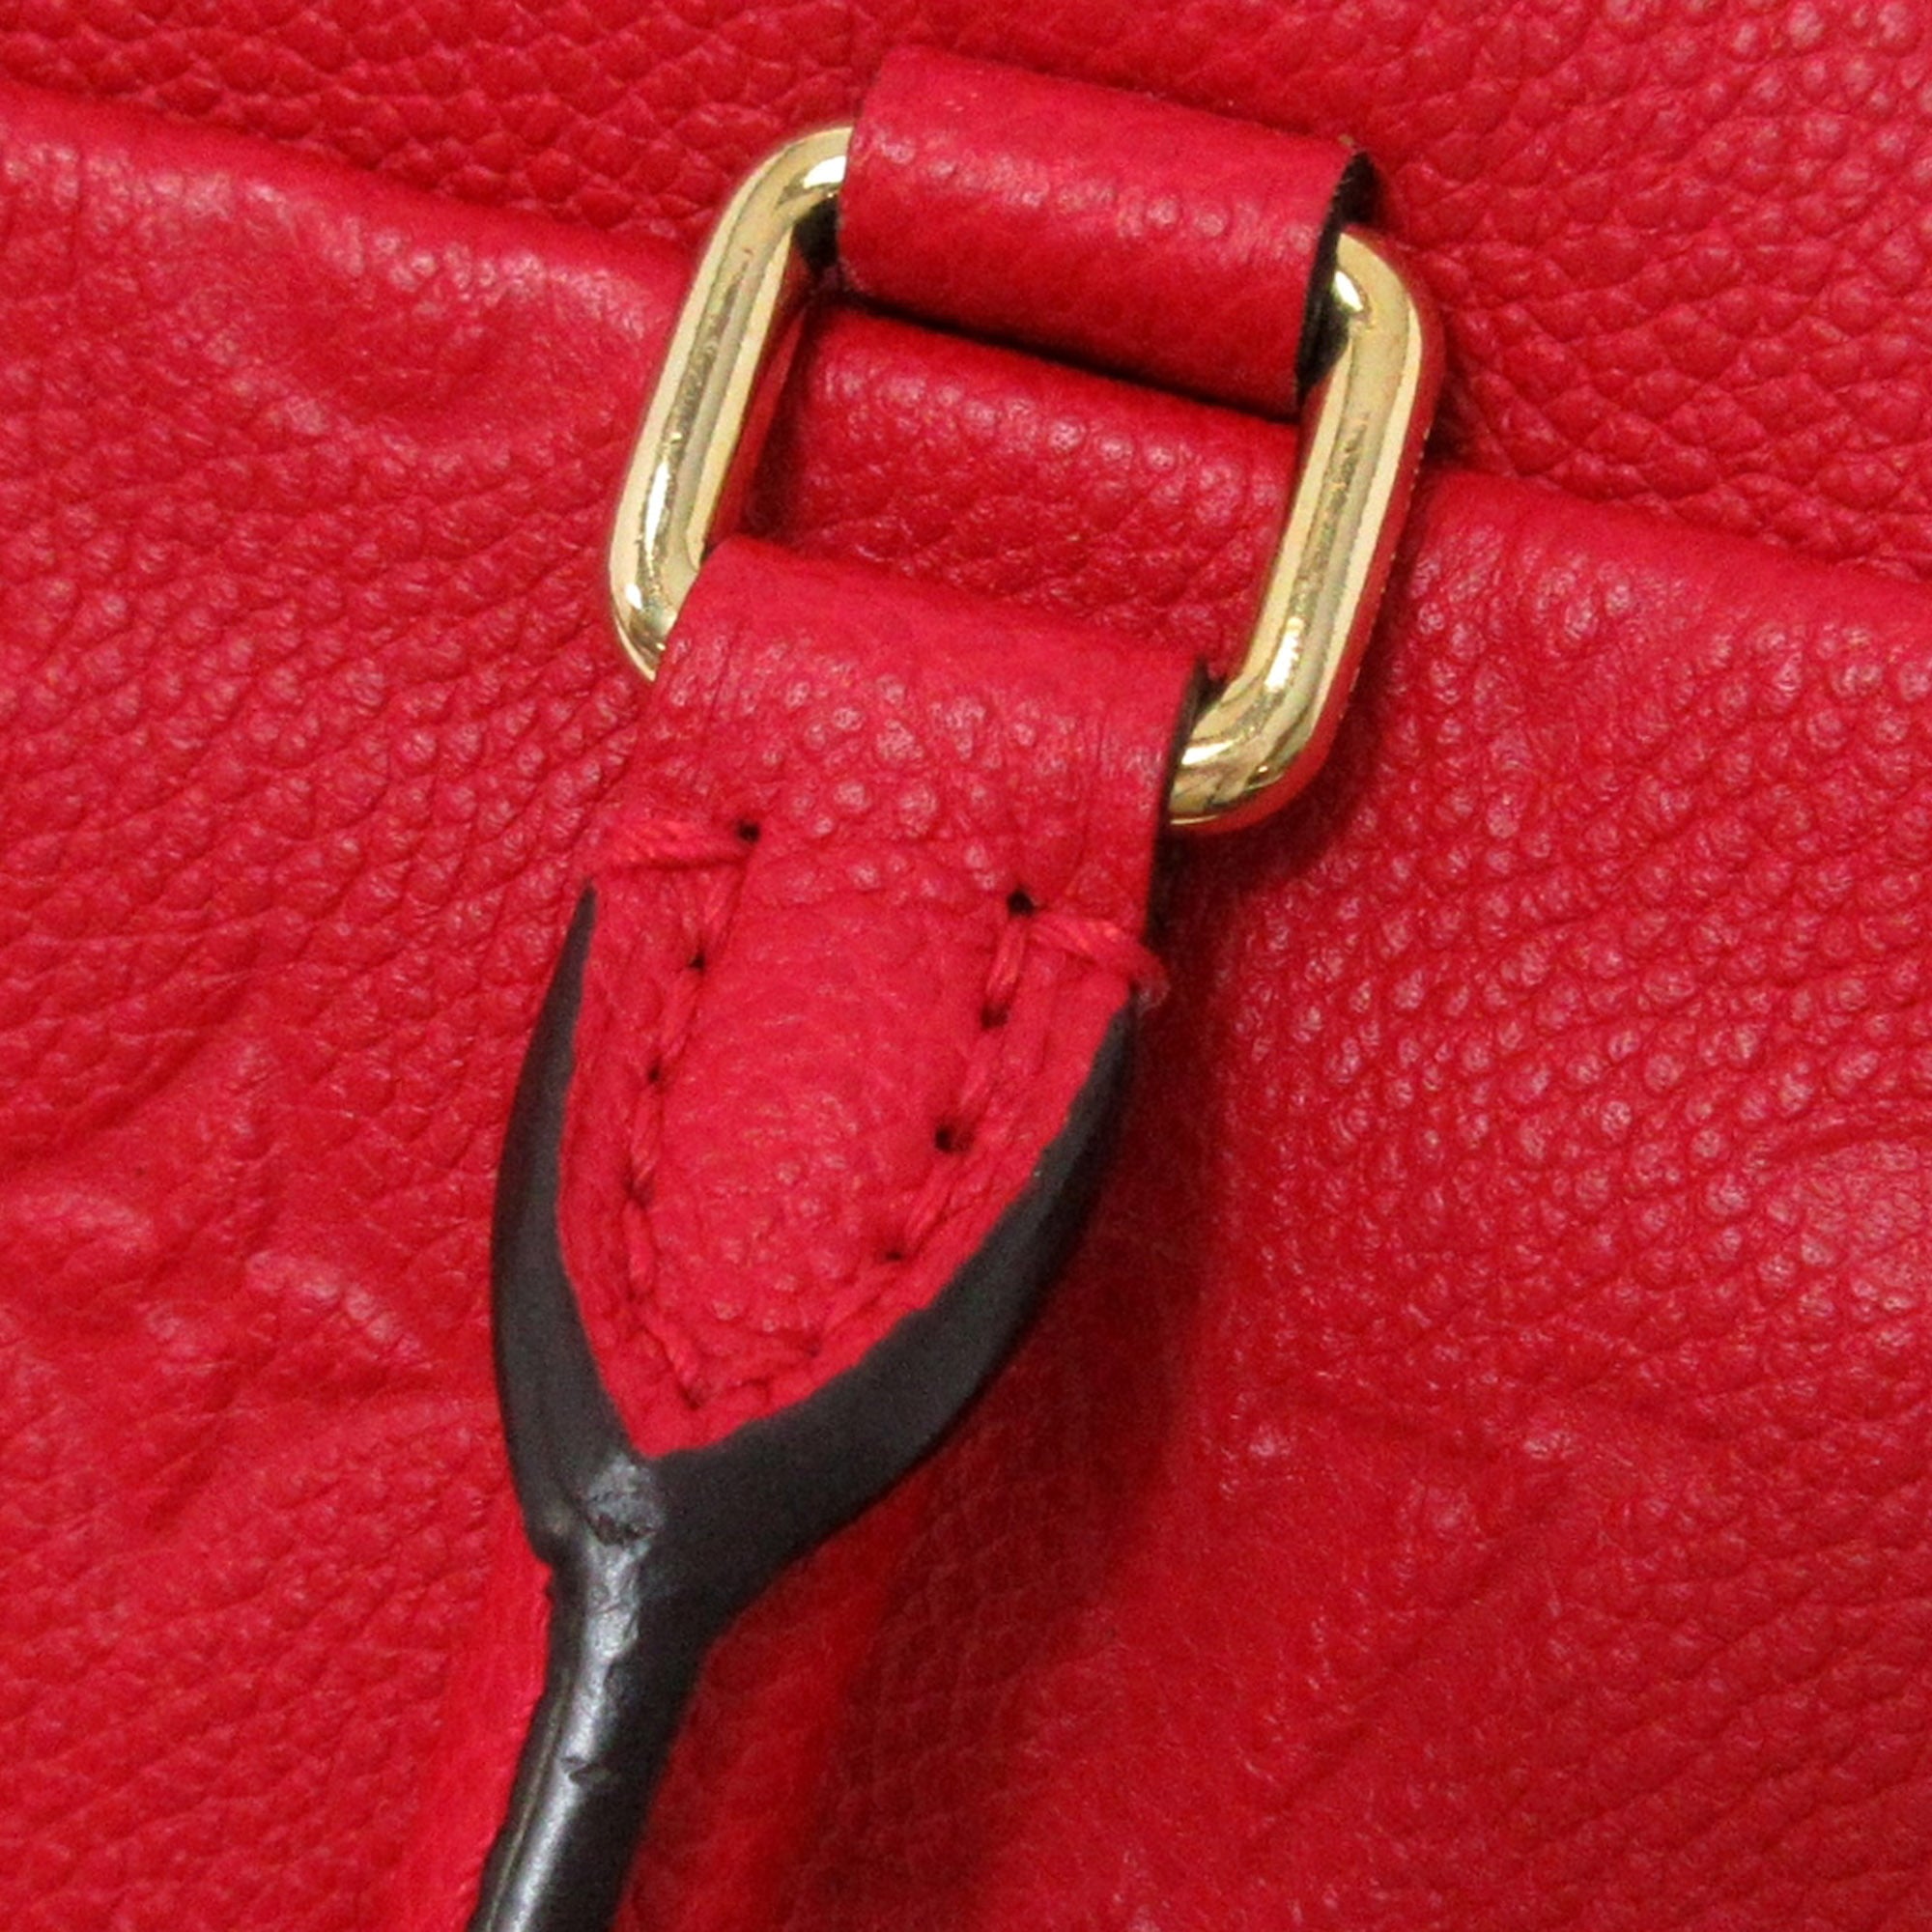 Speedy Bandouliere 25 Top handle bag in Monogram Empreinte leather